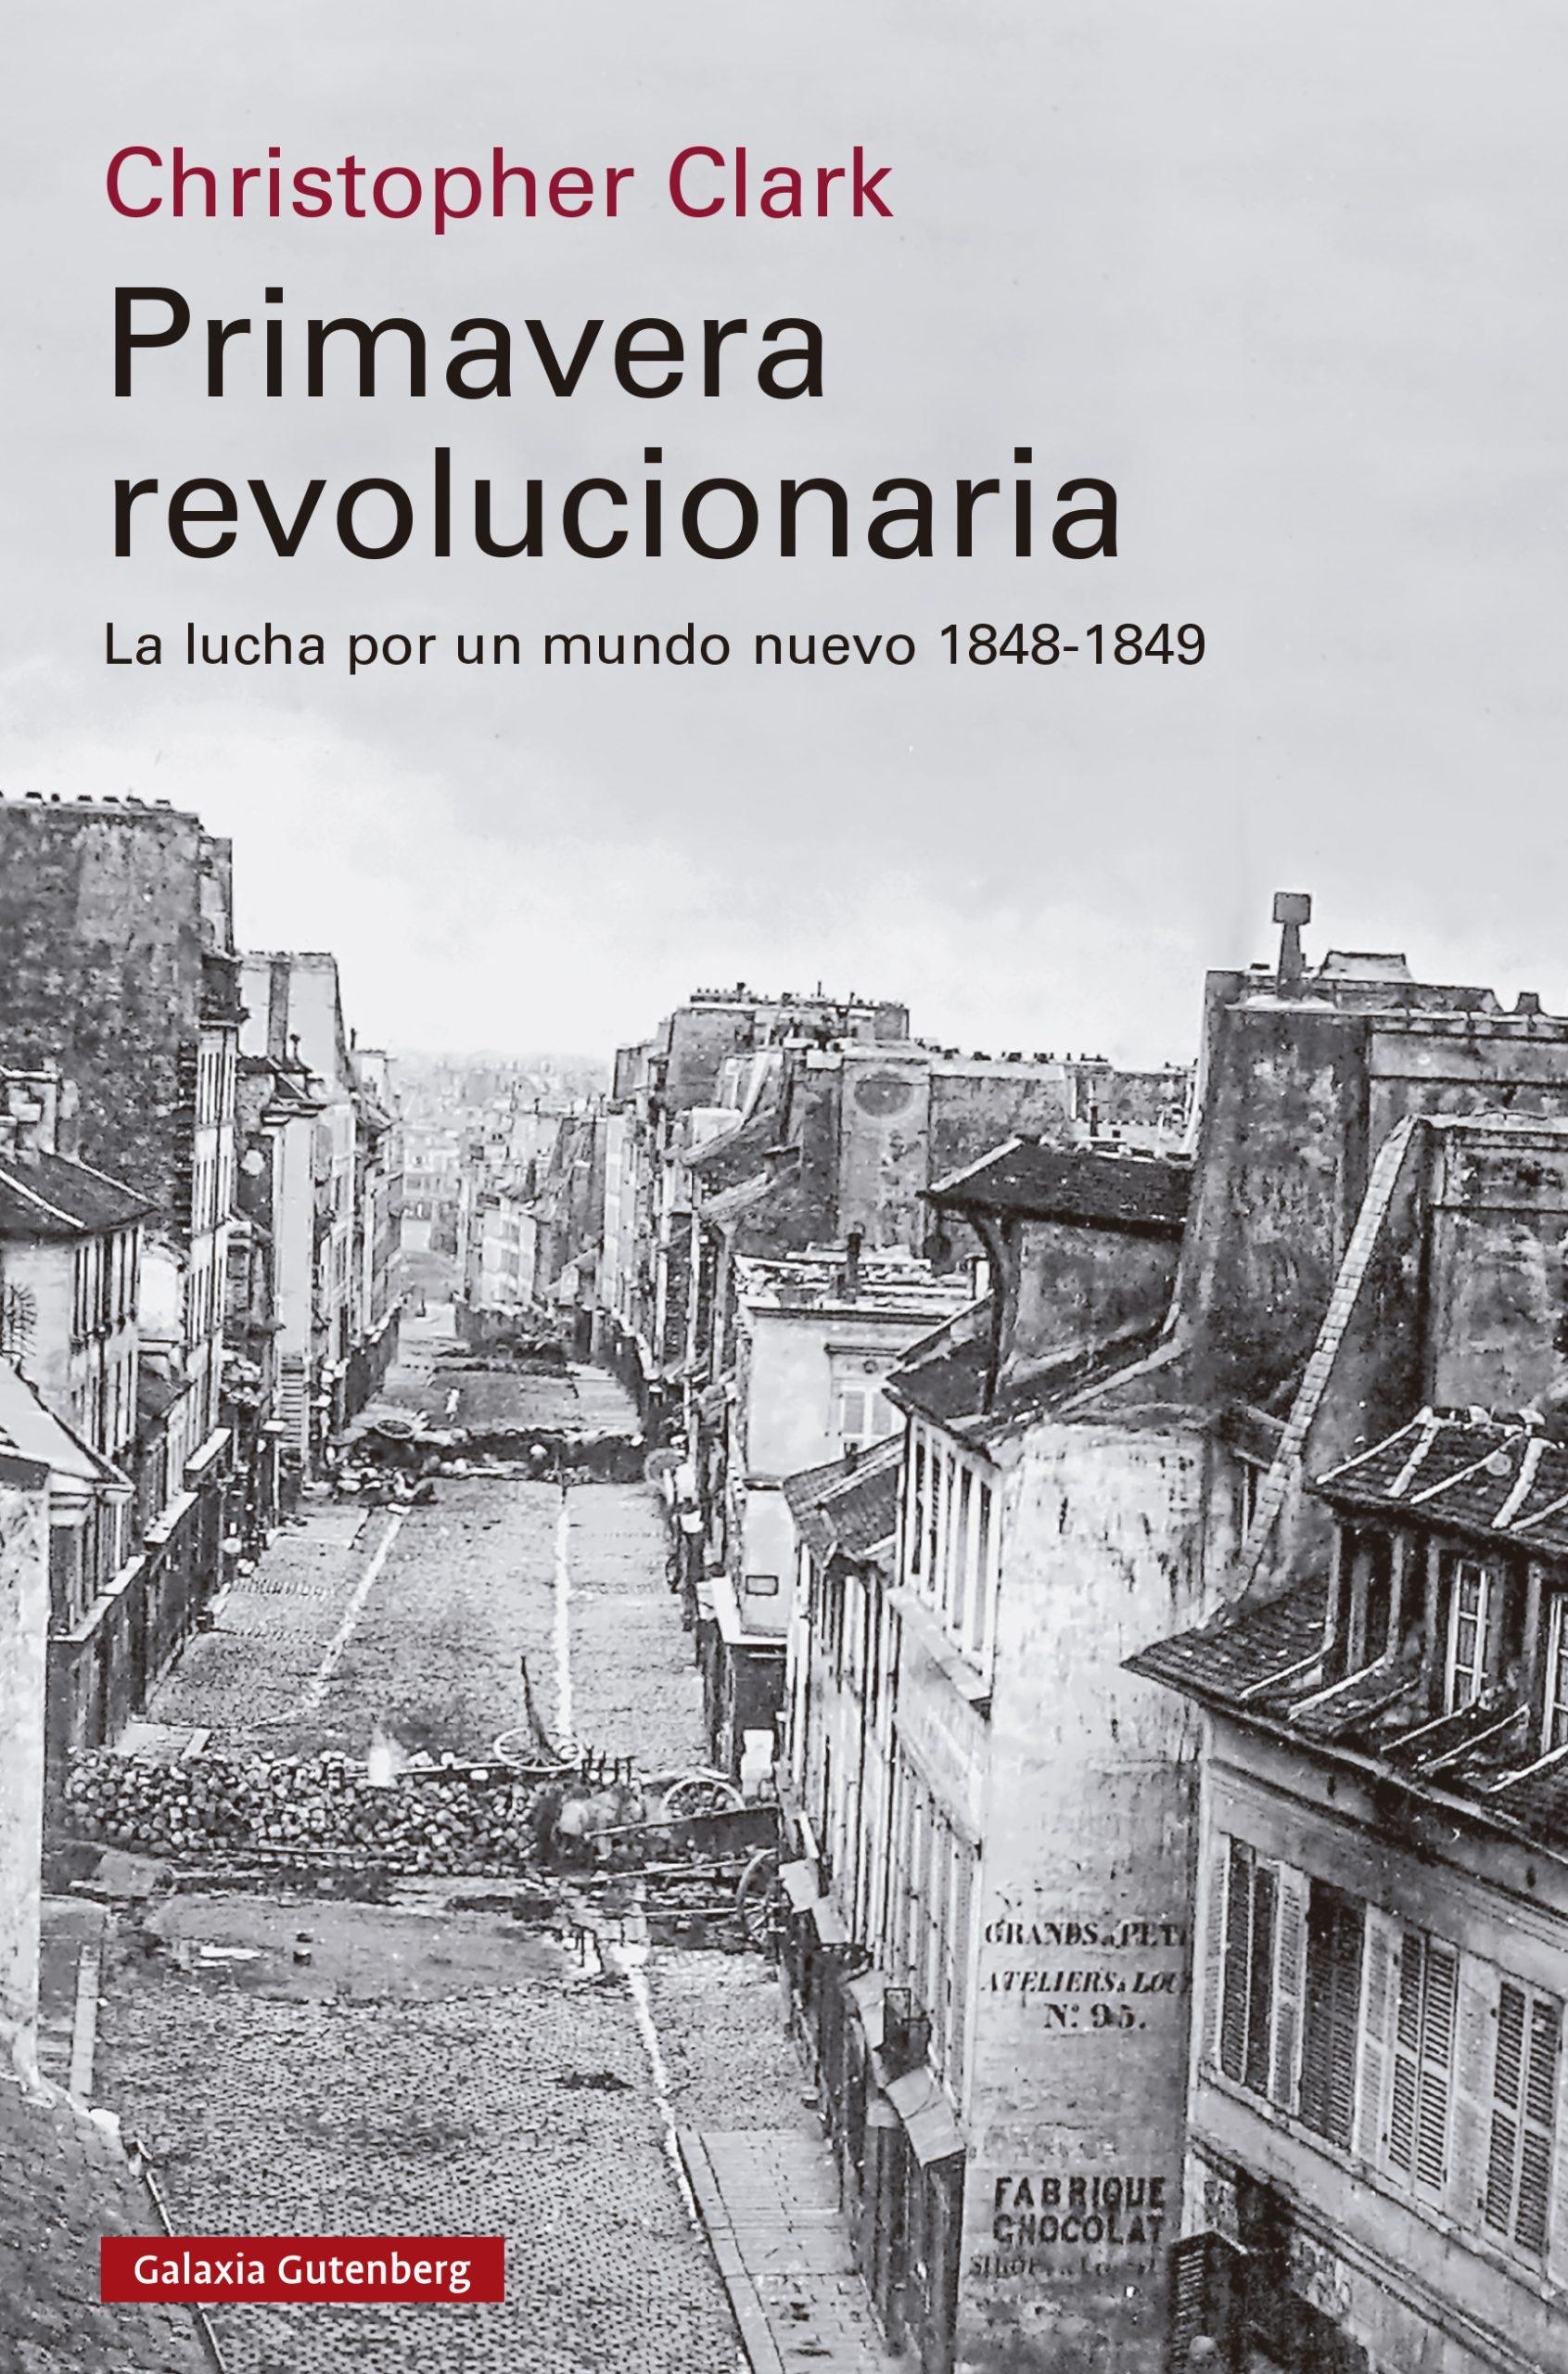 Primavera Revolucionaria "La Lucha por un Mundo Nuevo 1848-1849". 